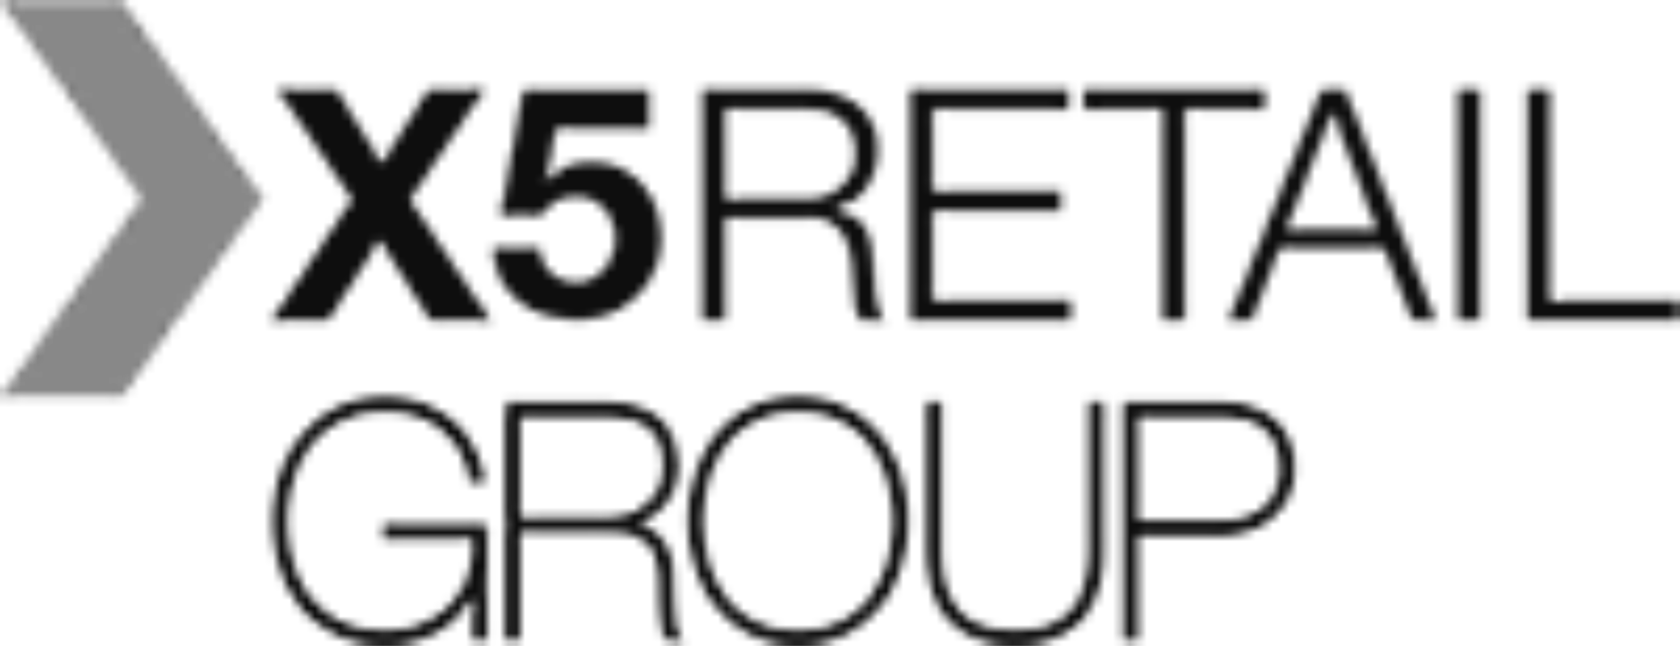 Логос х5 retail. X5 Retail Group logo. Значок x5 Retail Group. Х5 Ритейл групп логотип. X5 Retail Group логотип вектор.